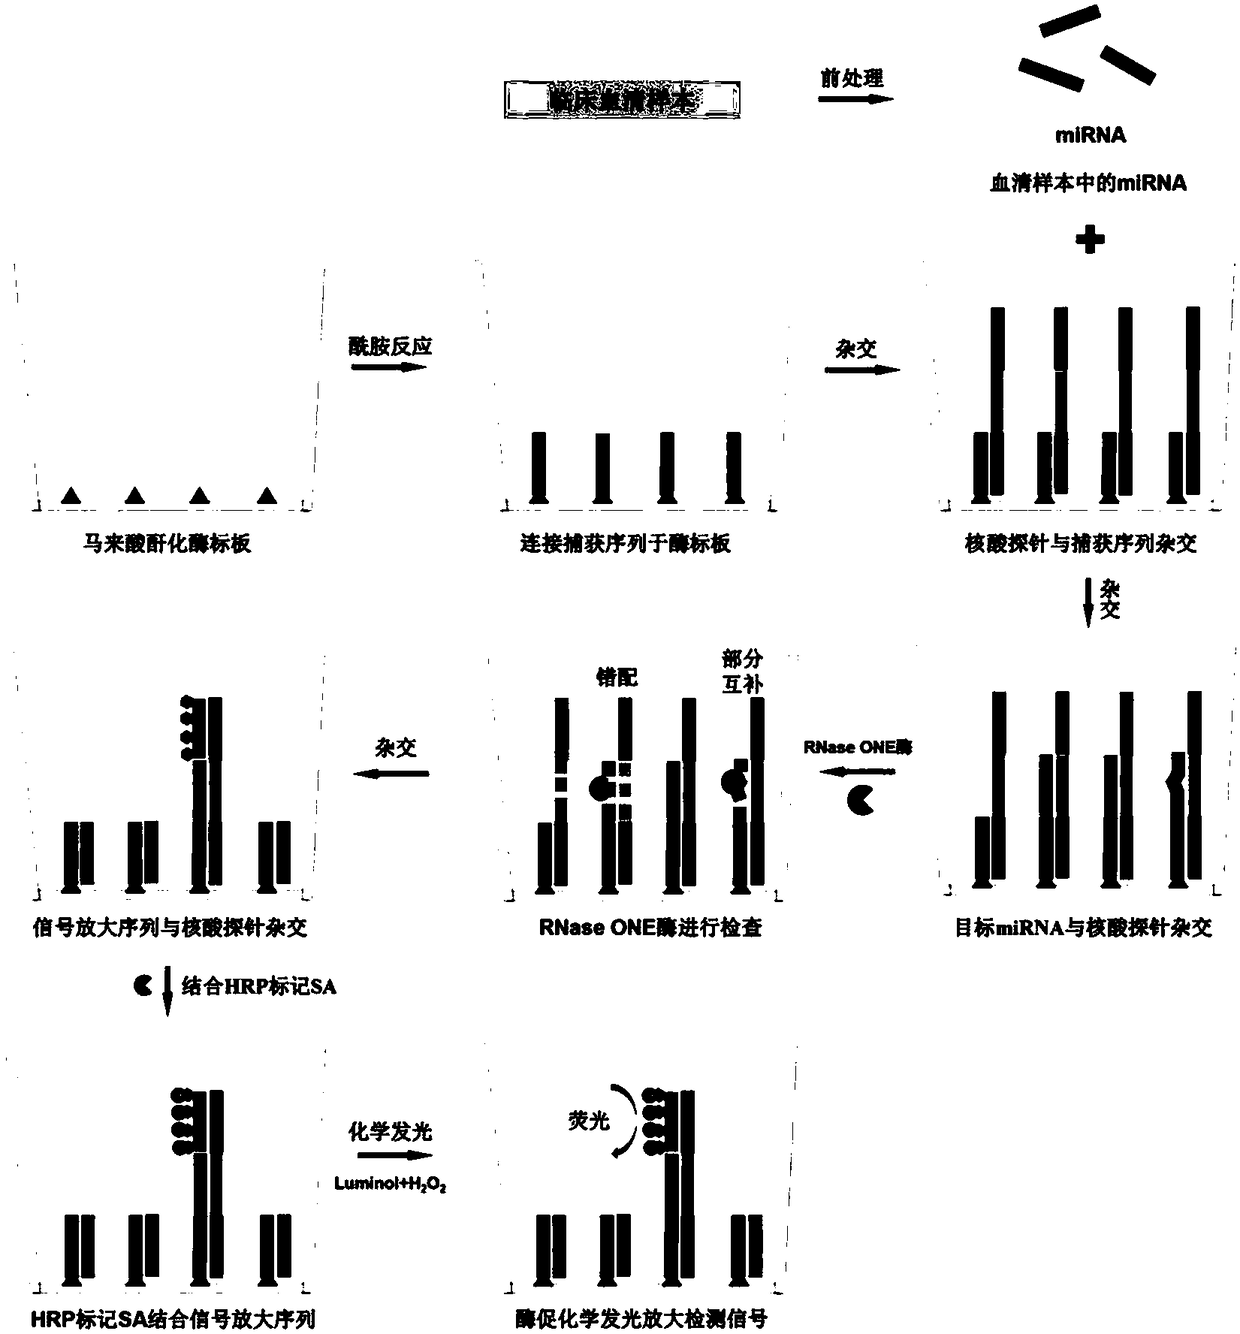 Method for quantitatively assaying serum miRNA by utilizing RNase ONE nuclease and chemiluminescence technology